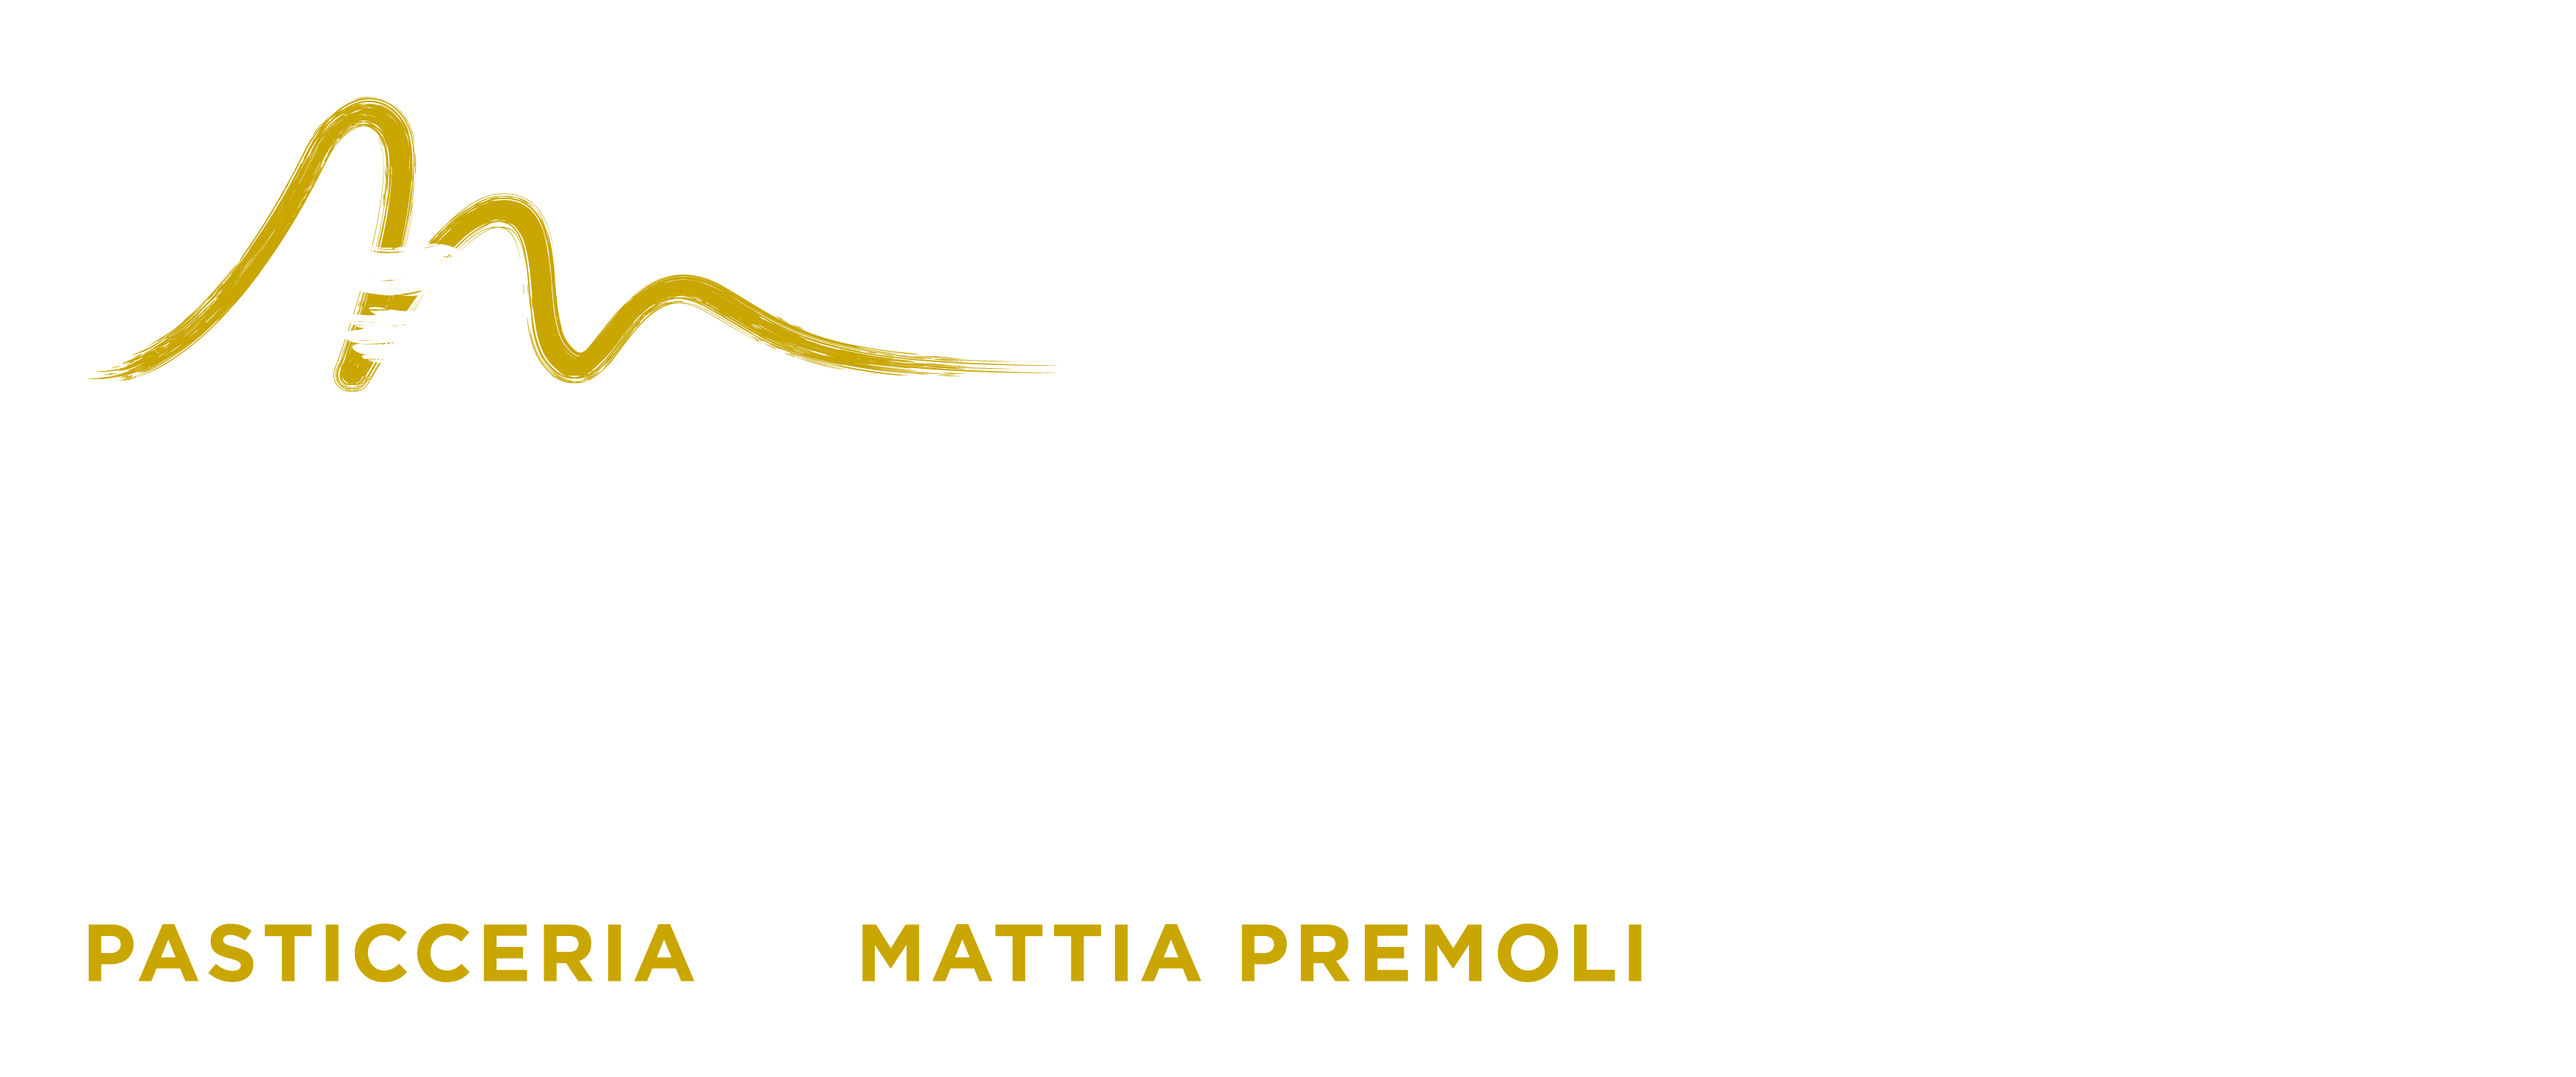 Panettone Madre Logo